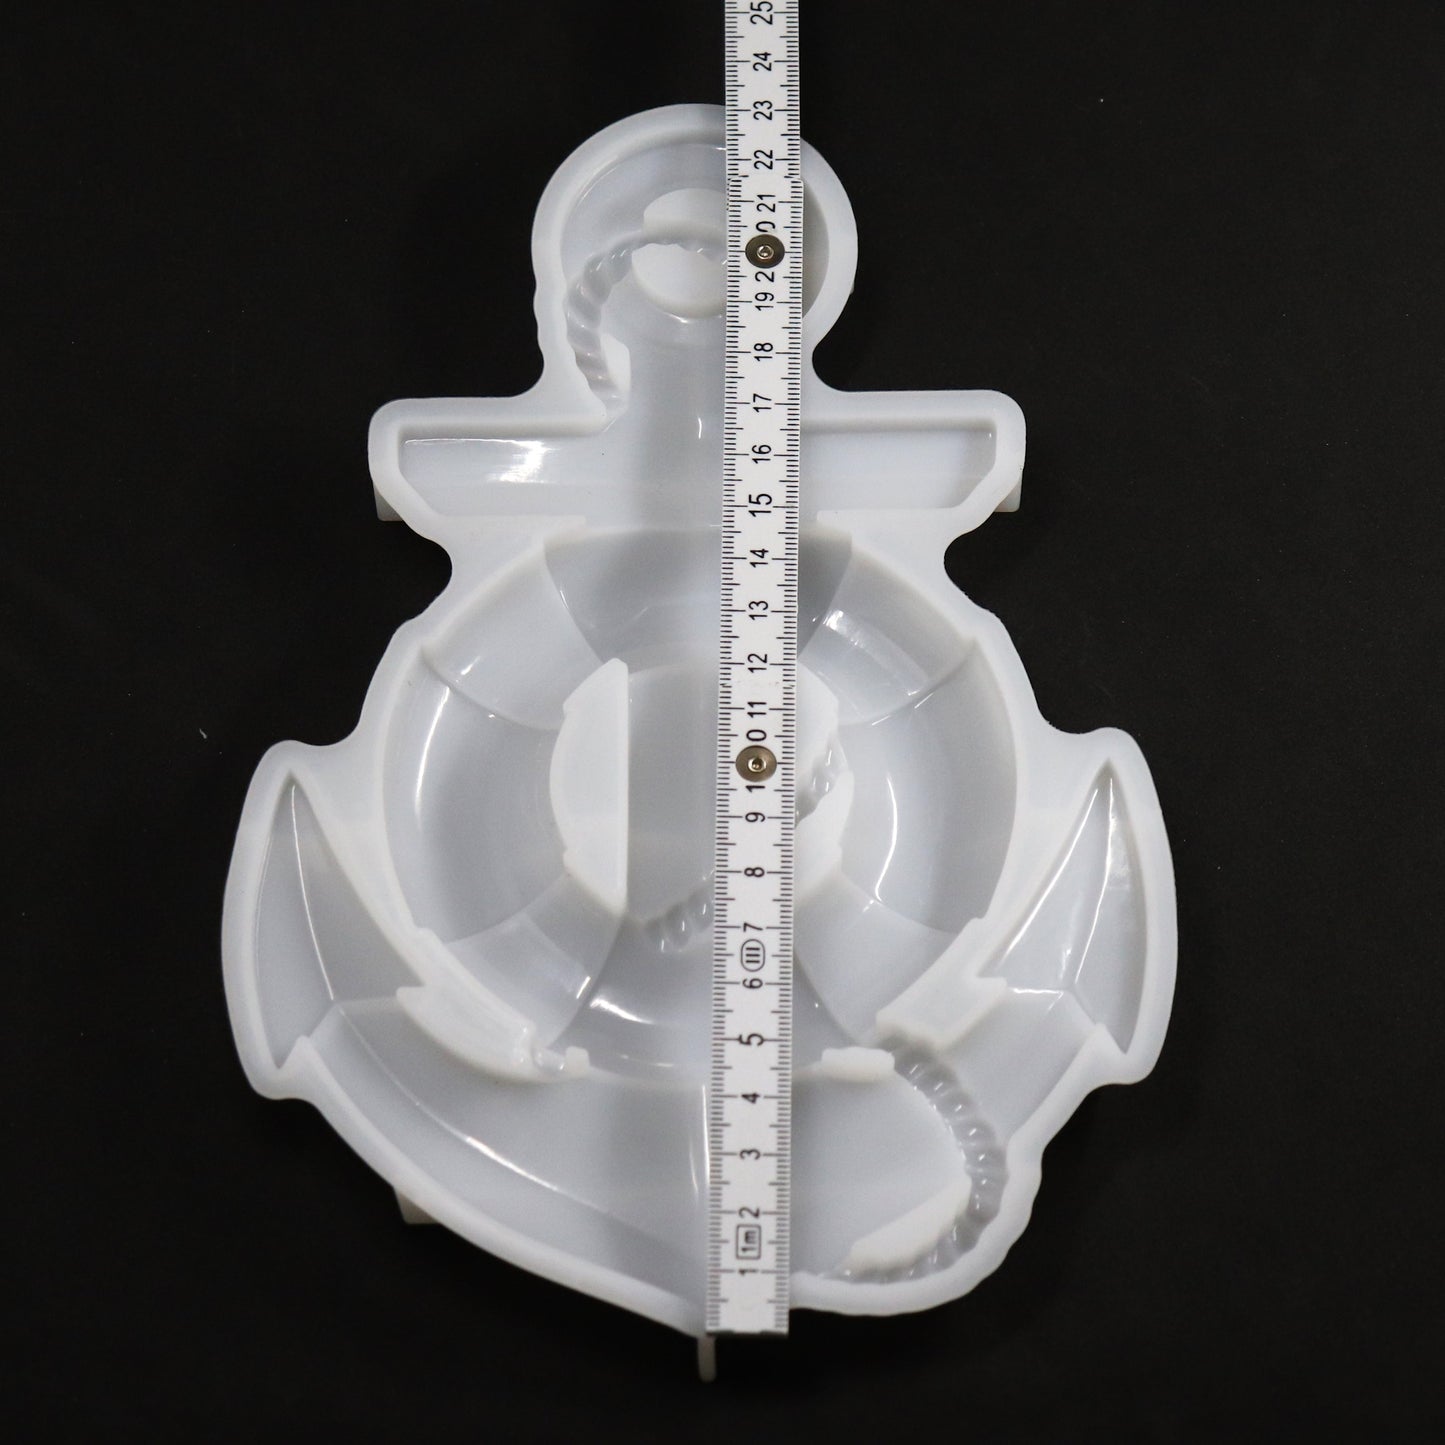 Silikonform Anker mit Ring Gießform Wanddekoration, Epoxidharz, Raysin ca. 22 cm